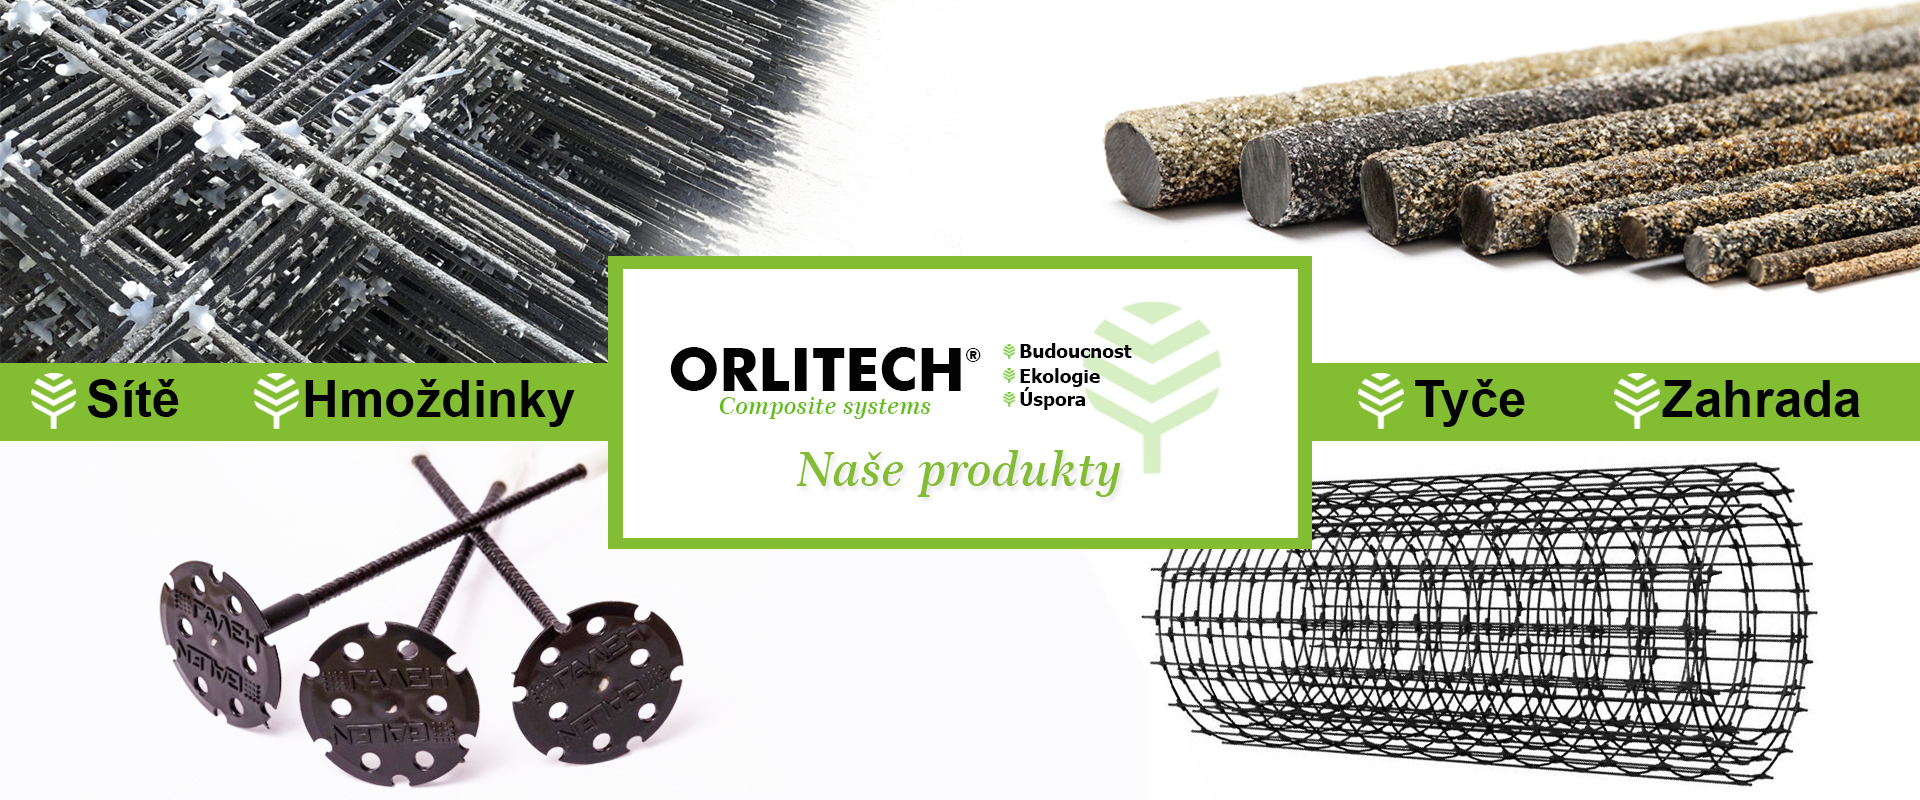 Orlitech Composite Systems in Czech Republic